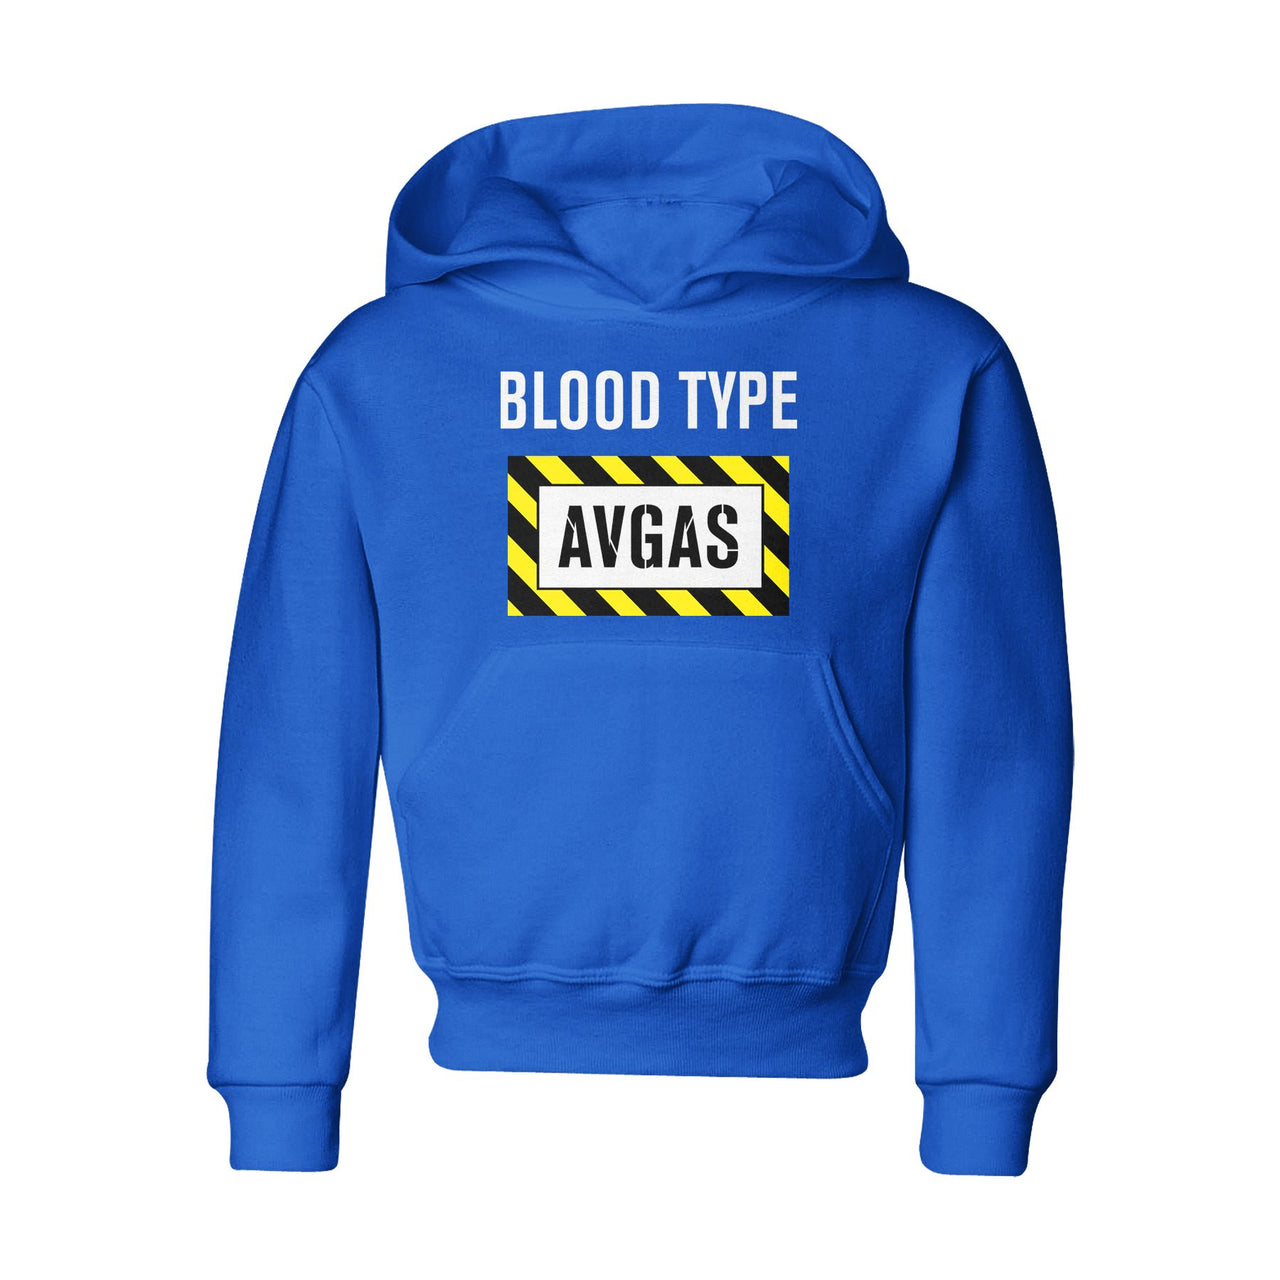 Blood Type AVGAS Designed "CHILDREN" Hoodies